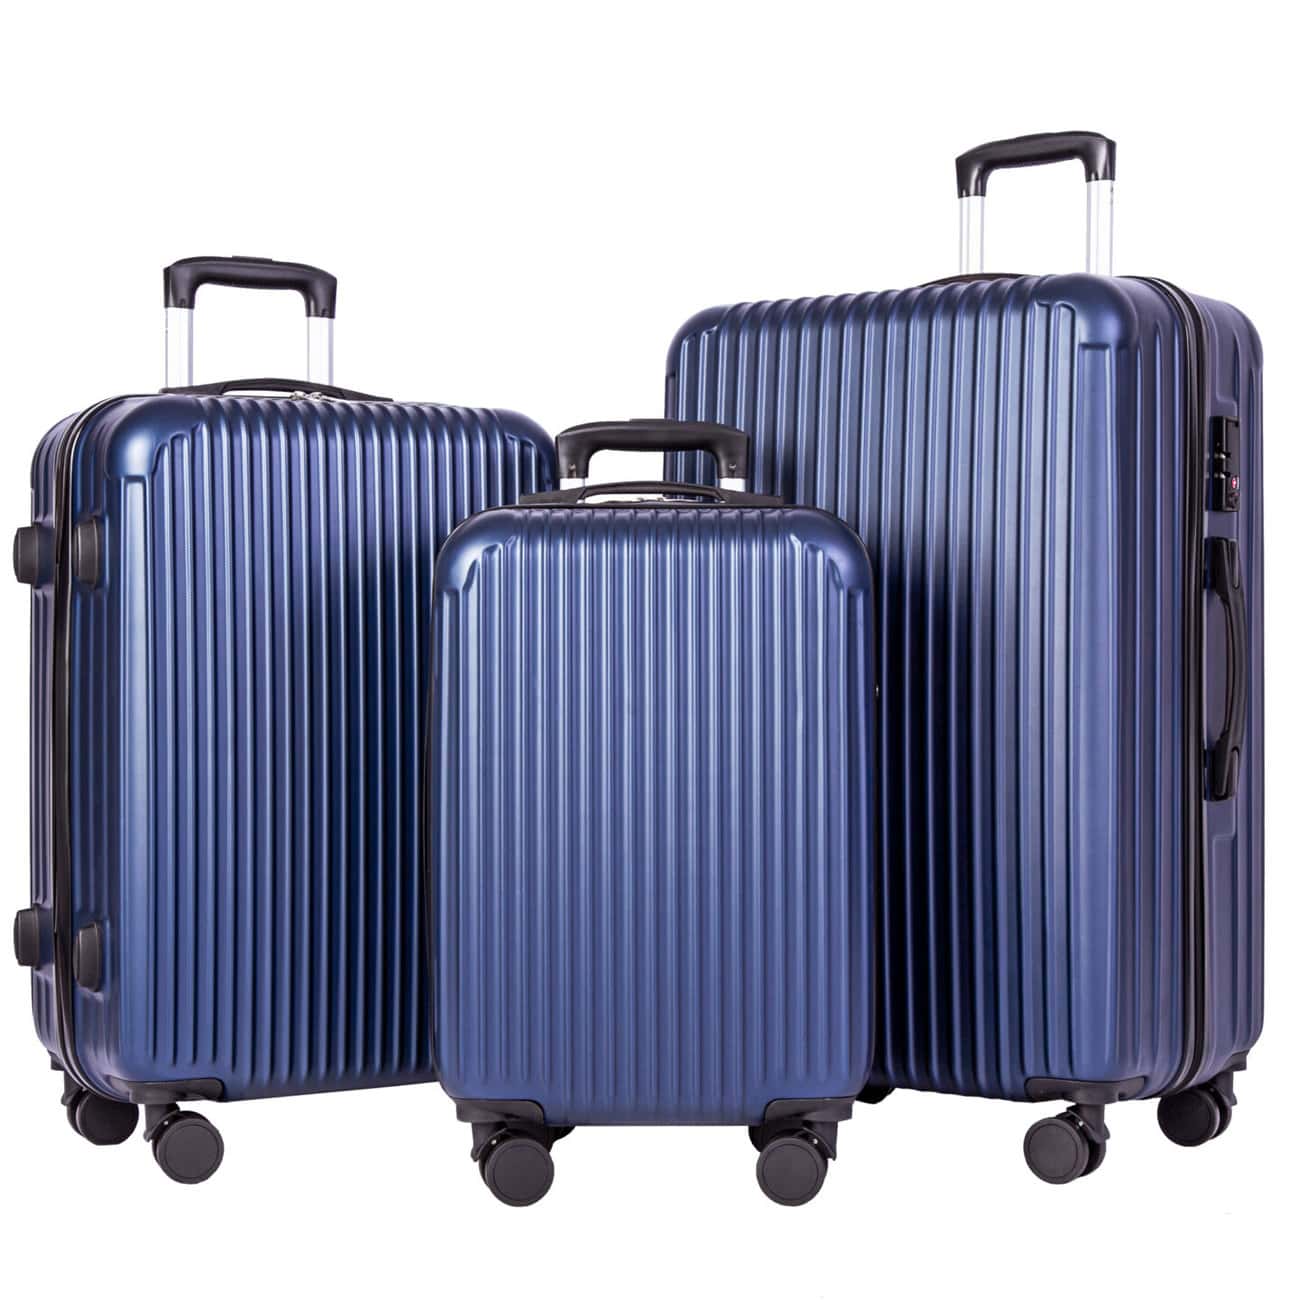 Walmart YouYeap 3 Piece Luggage Sets Hardshell Lightweight Suitcase with TSA Lock Blue